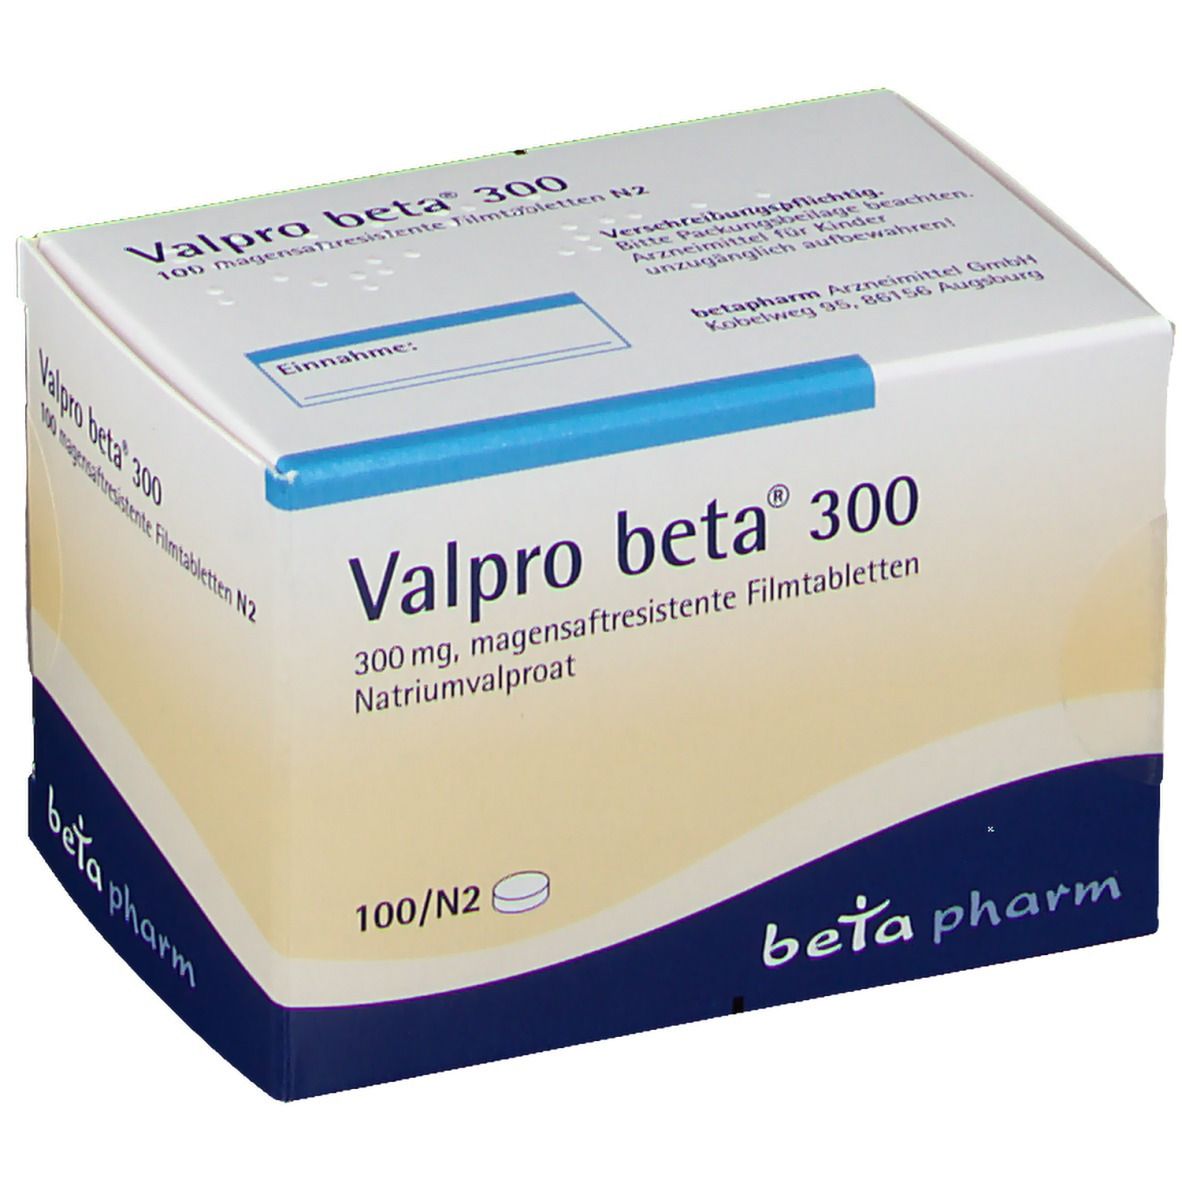 Valpro beta® 300